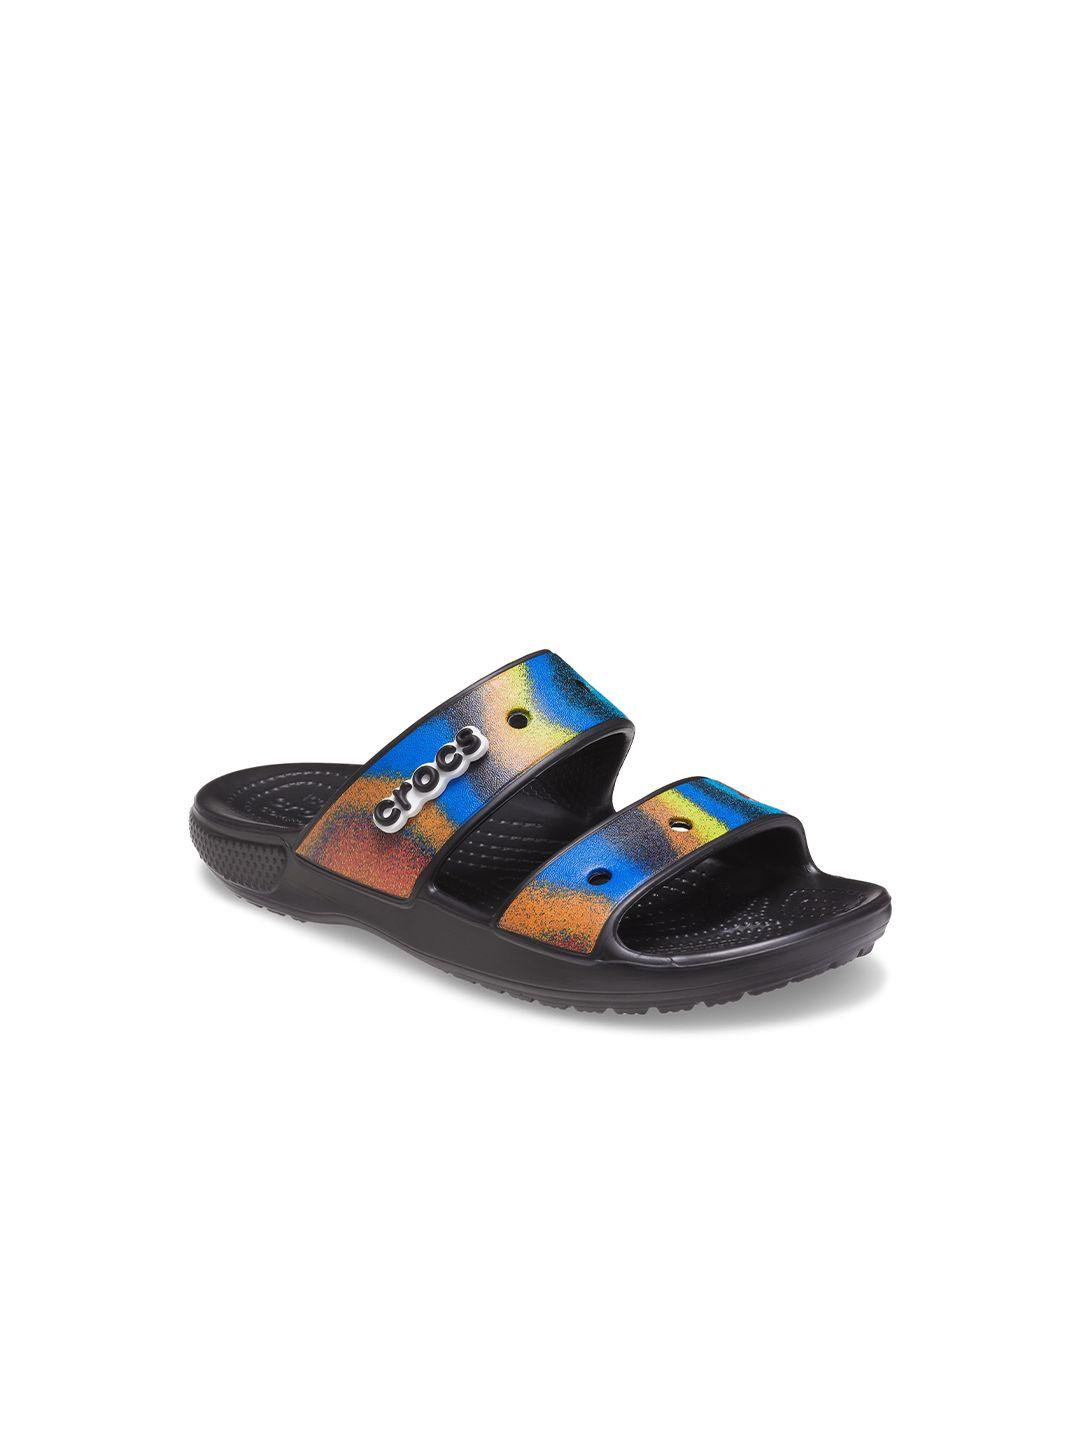 crocs printed croslite comfort sandals